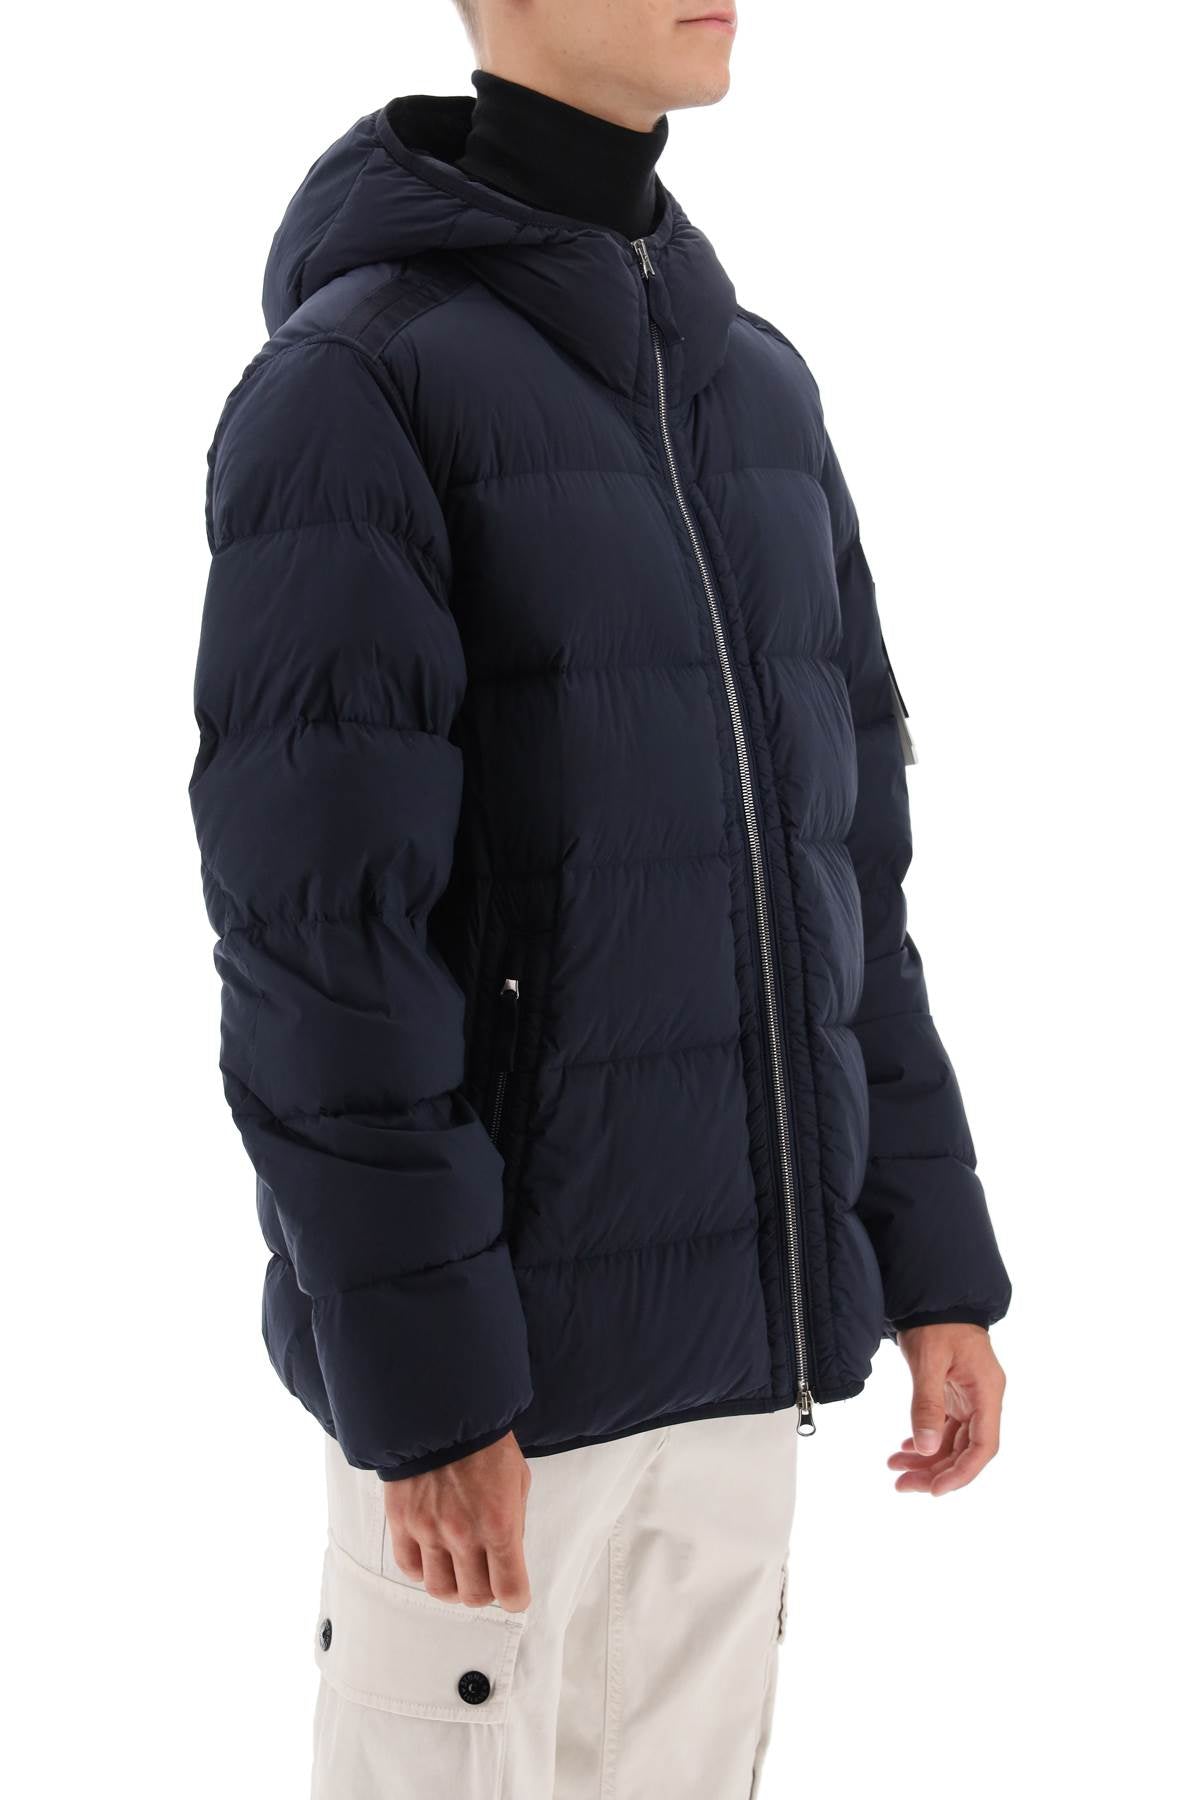 Stone Island hooded puffer jacket in seamless tunnel nylon - Blue